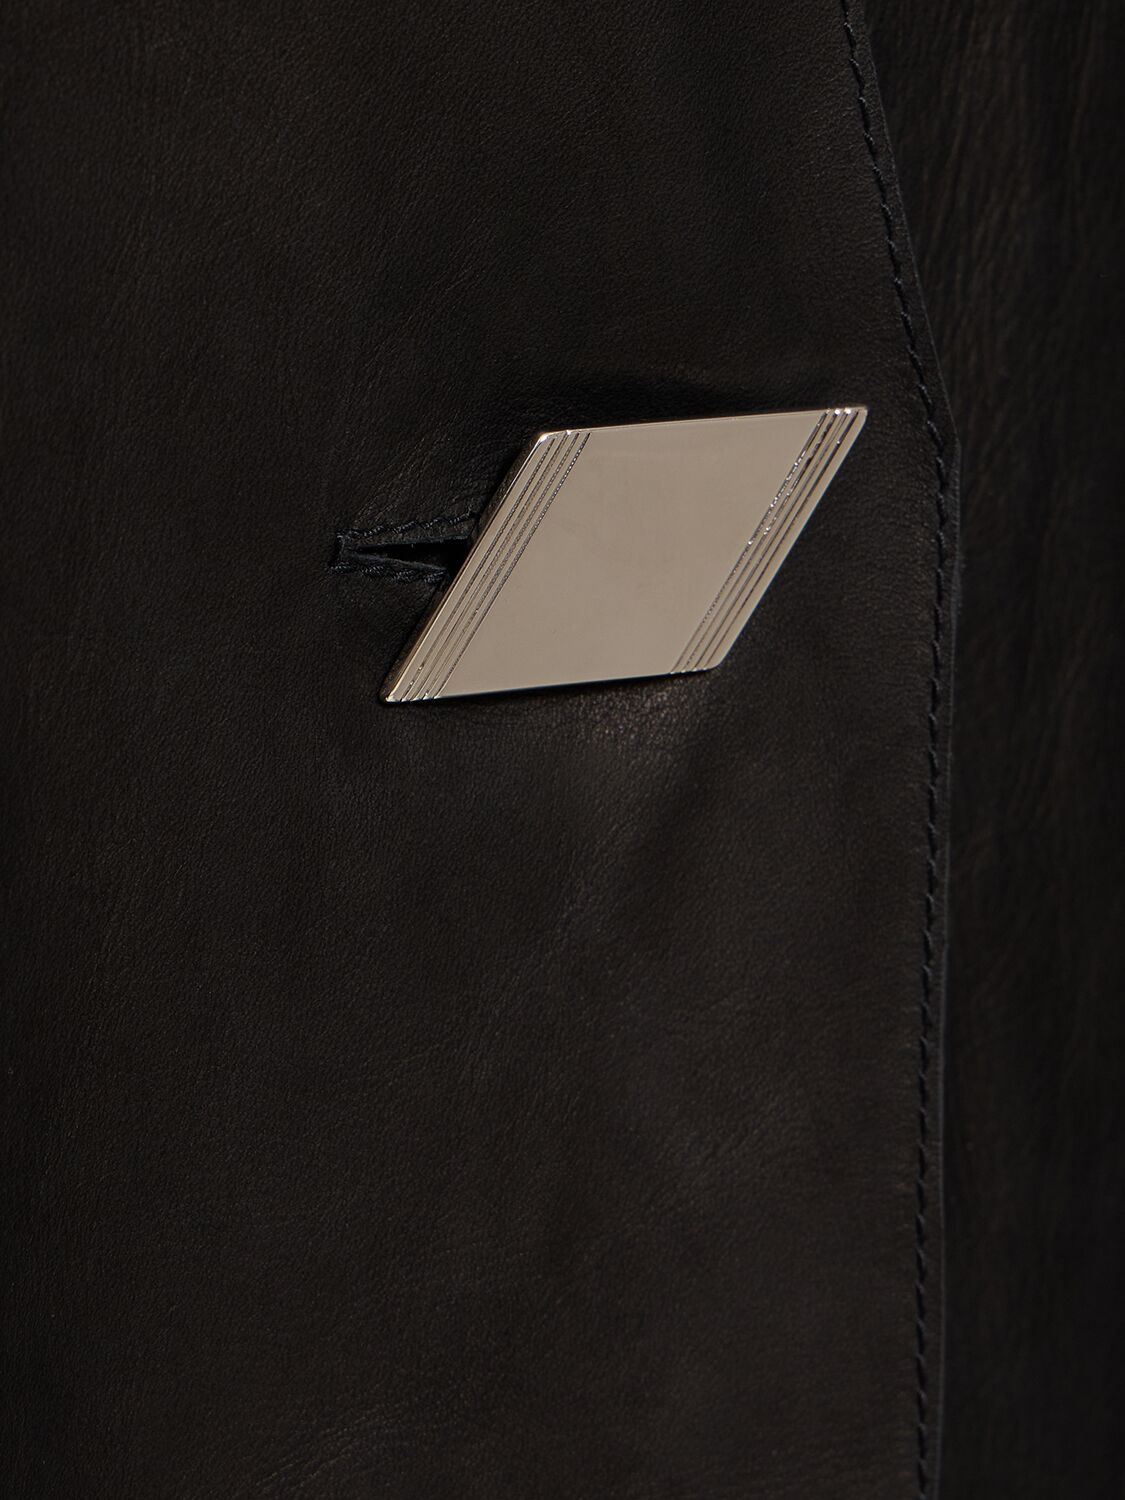 Shop Attico Treated Leather Single Breast Long Coat In Black